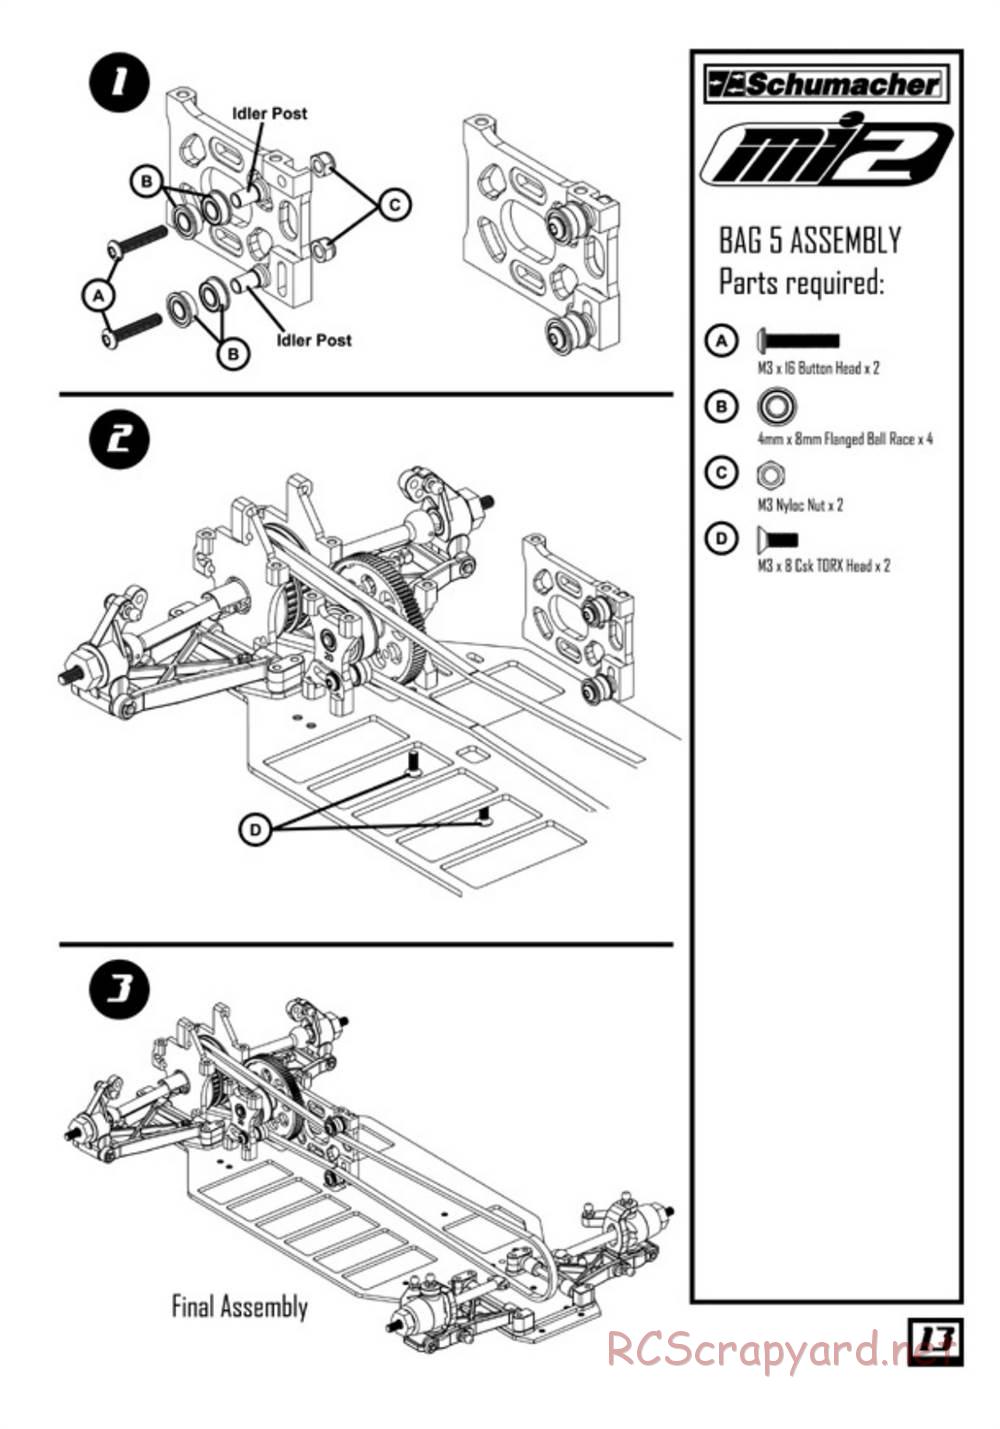 Schumacher - Mi2 - Manual - Page 15